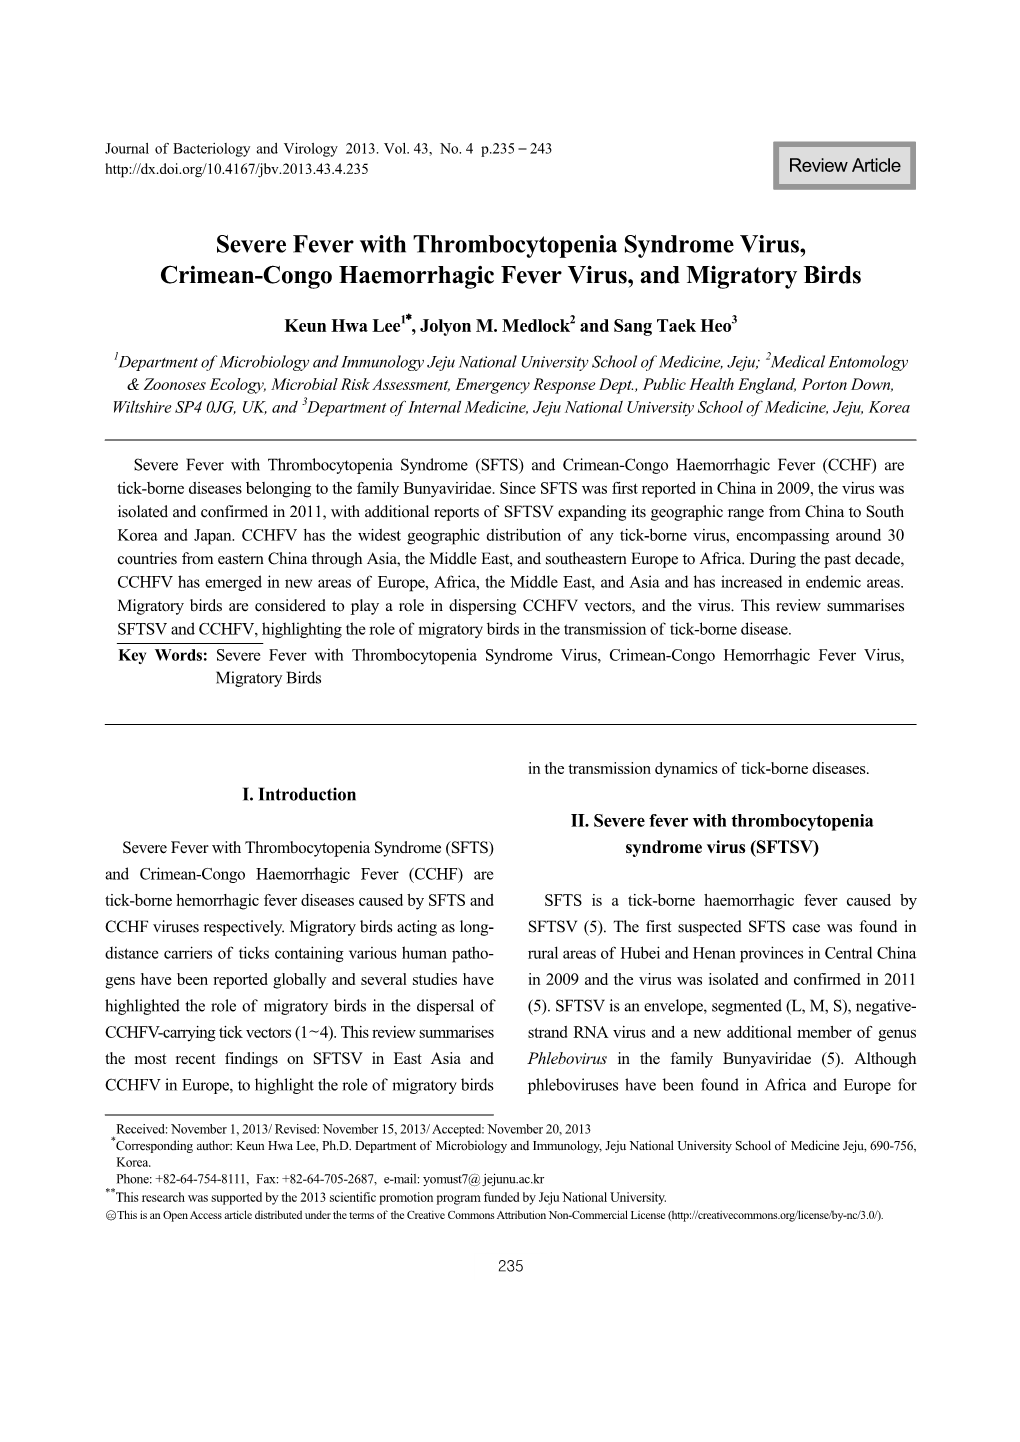 Severe Fever with Thrombocytopenia Syndrome Virus, Crimean-Congo Haemorrhagic Fever Virus, and Migratory Birds